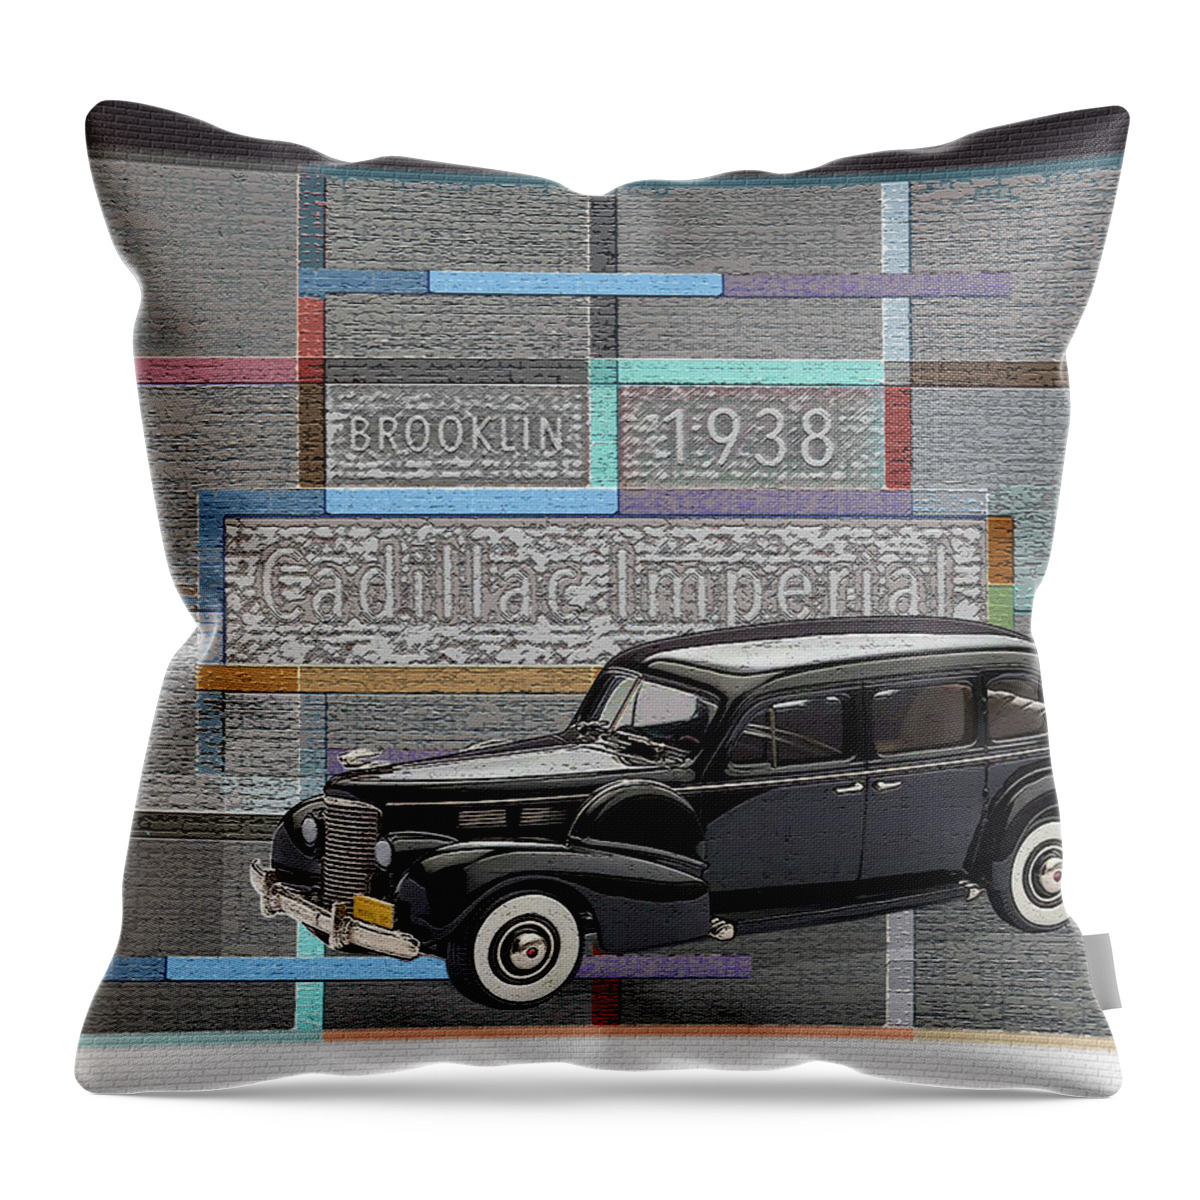 Brooklin Models Throw Pillow featuring the digital art Brooklin Models / Cadillac Imperial by David Squibb